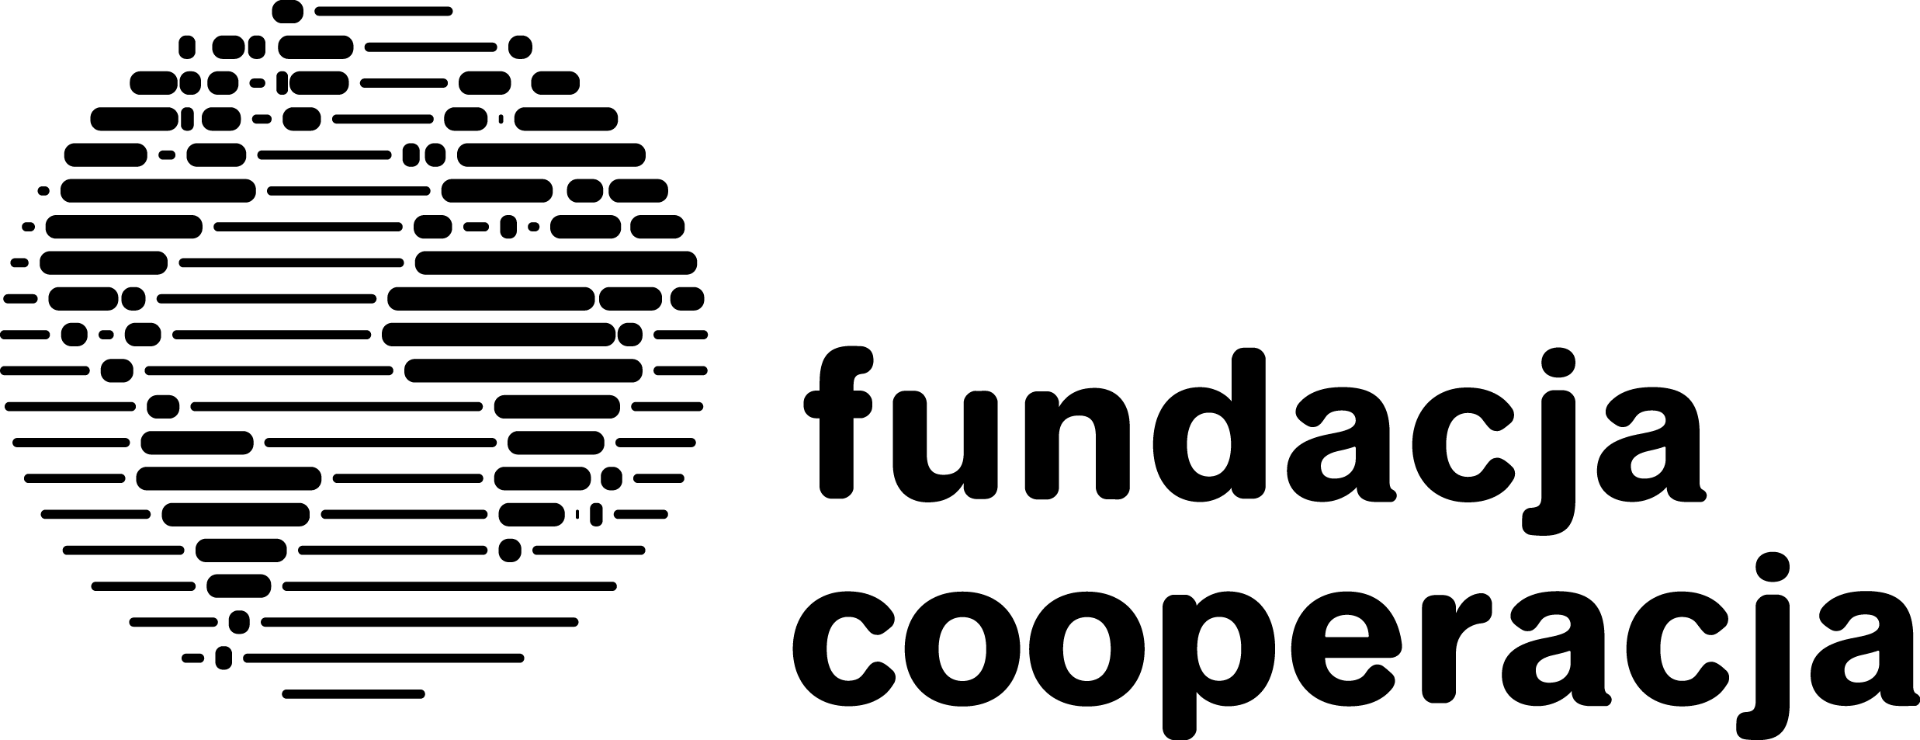 fundacja cooperacja logo 